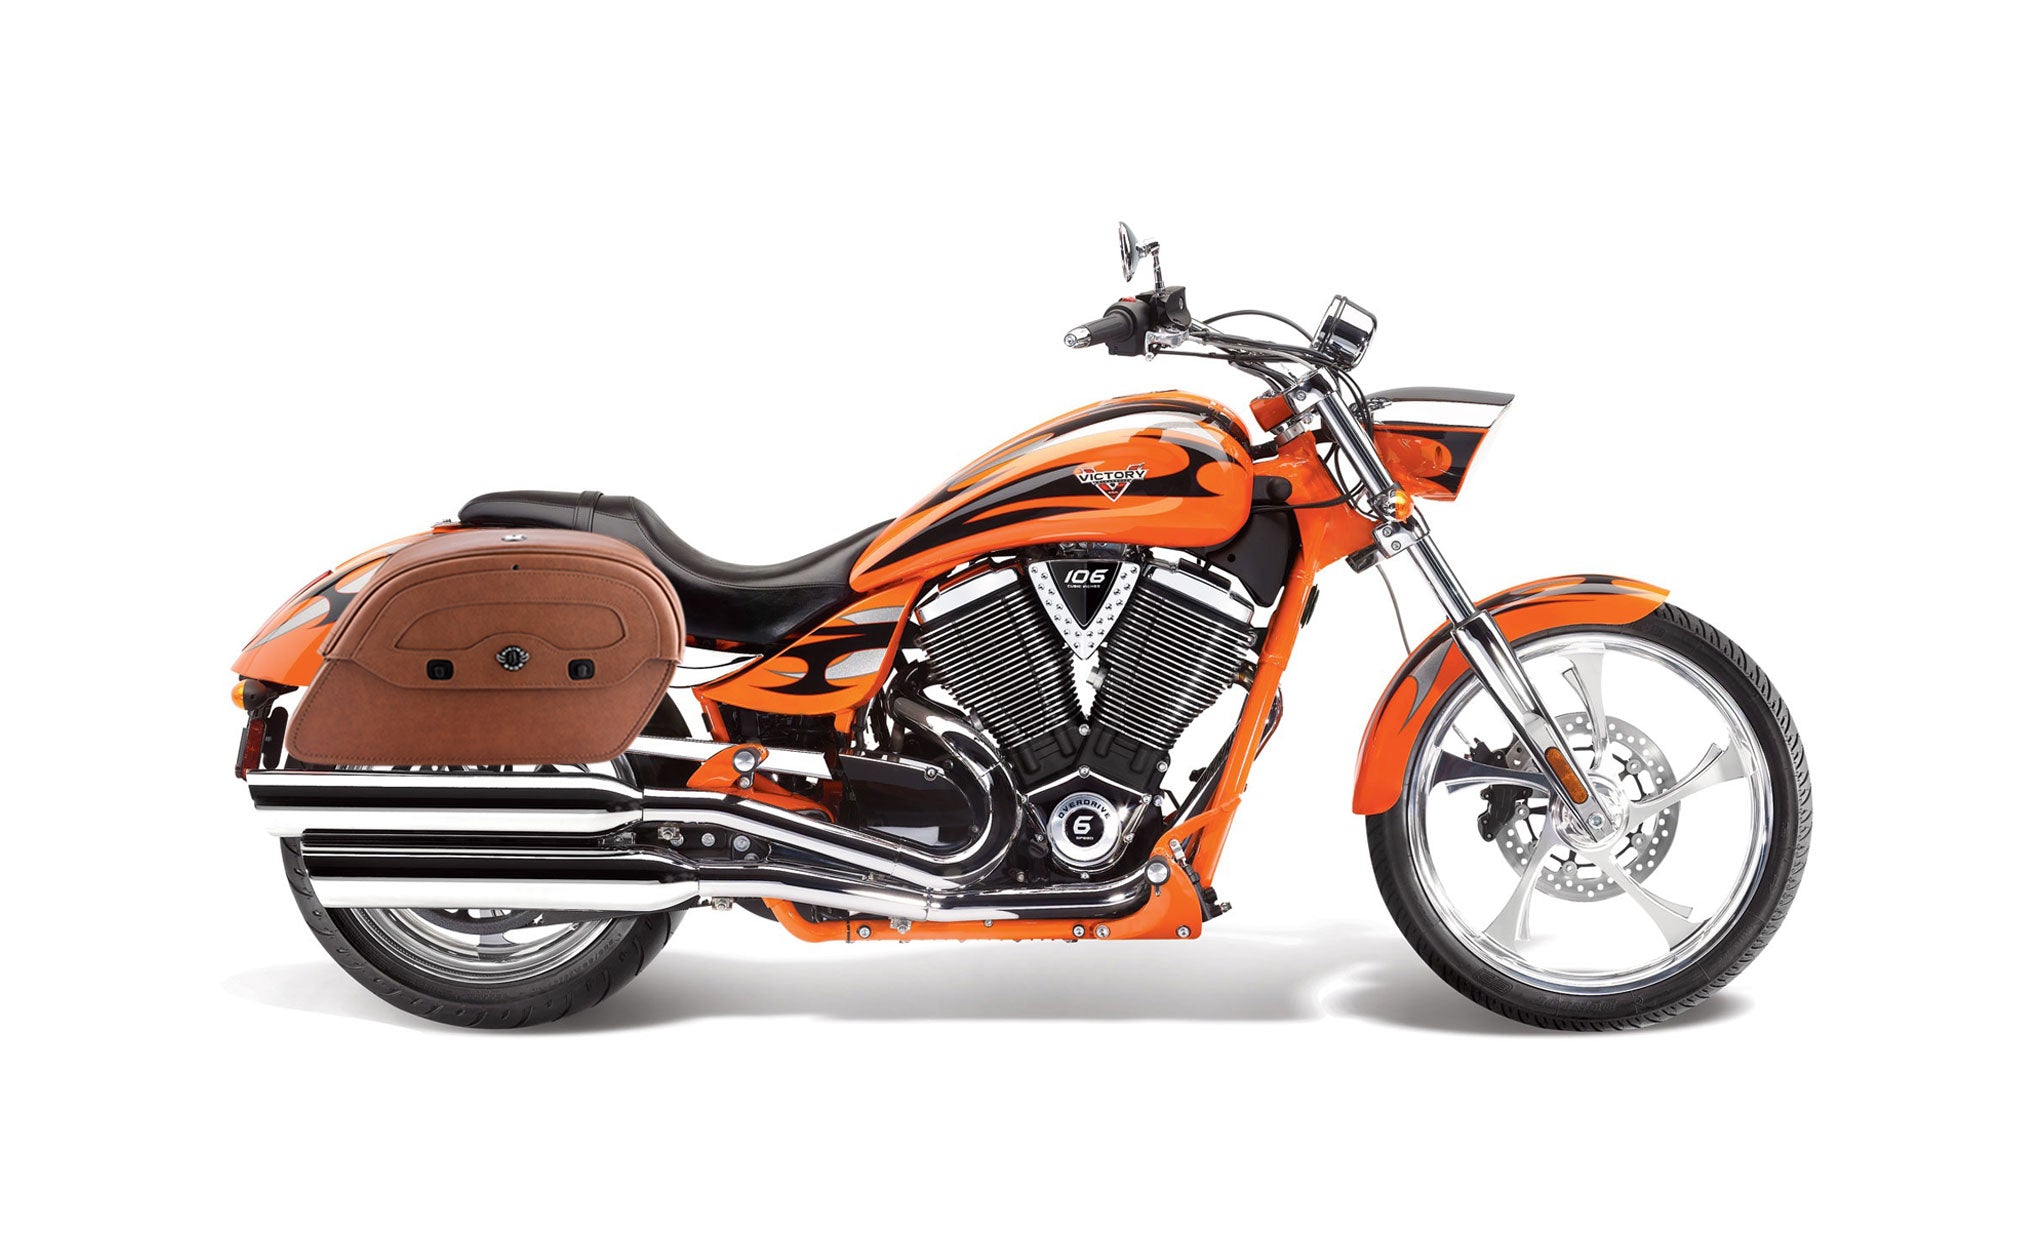 Viking Warrior Brown Large Victory Jackpot Leather Motorcycle Saddlebags on Bike Photo @expand